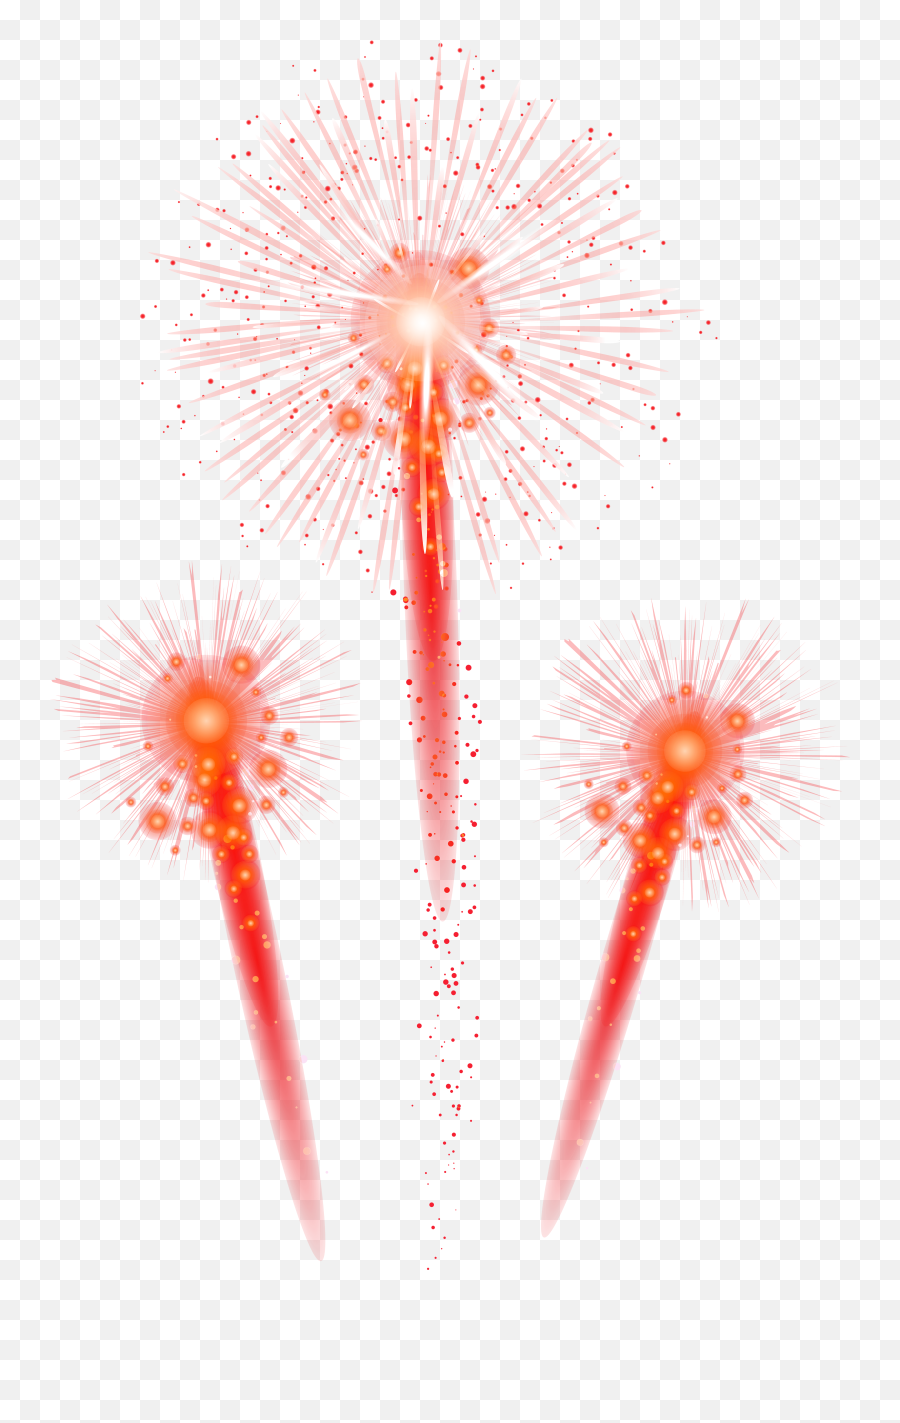 Firework Clip Art - Clipartandscrap Fireworks Png,Transparent Fireworks